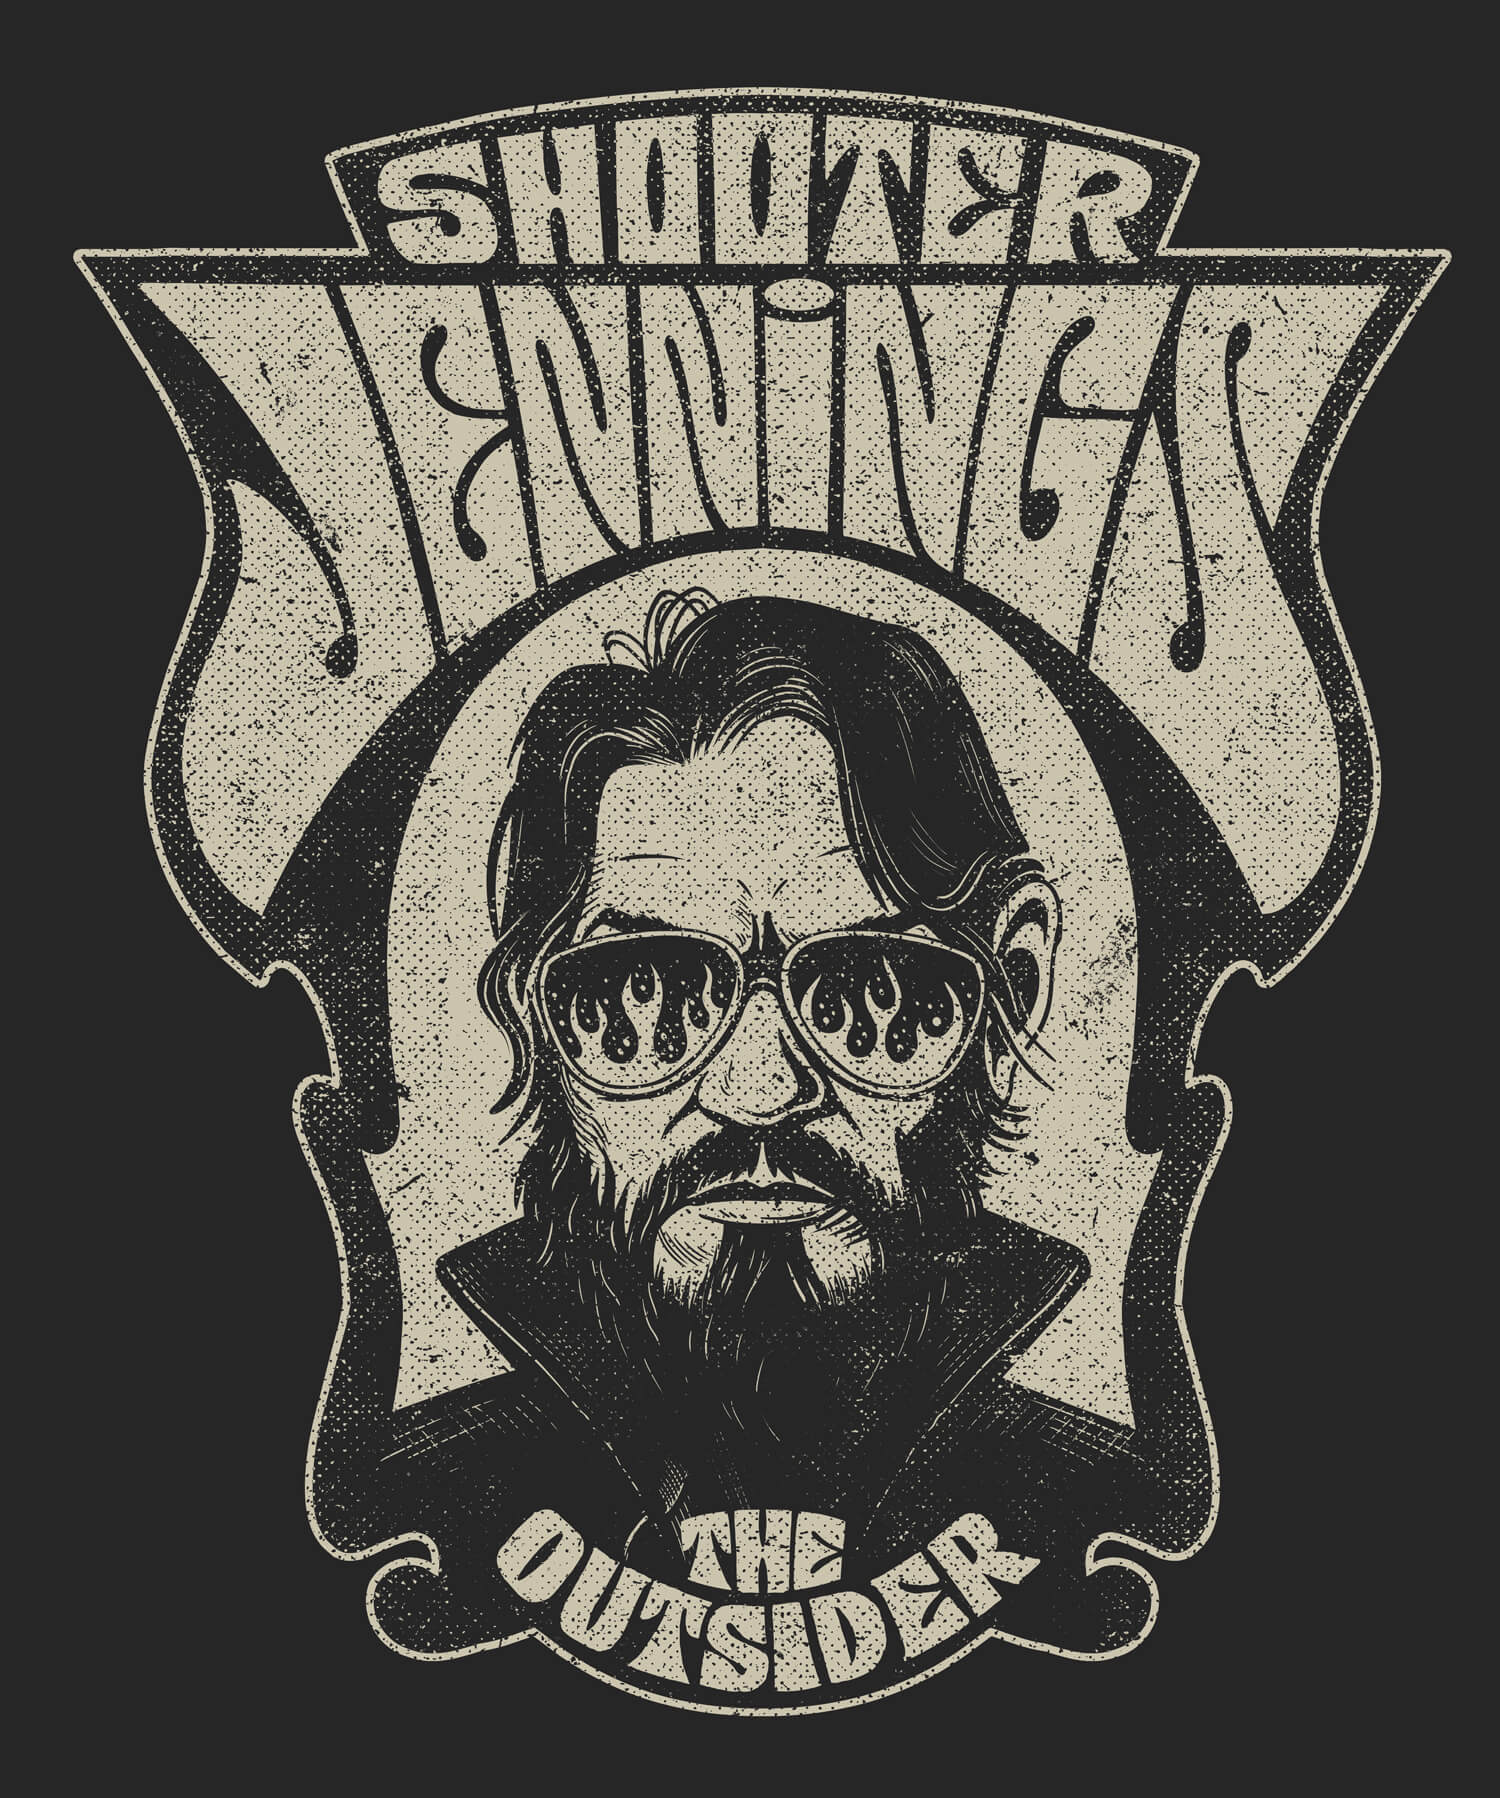 Shooter Jennings T-shirt Design